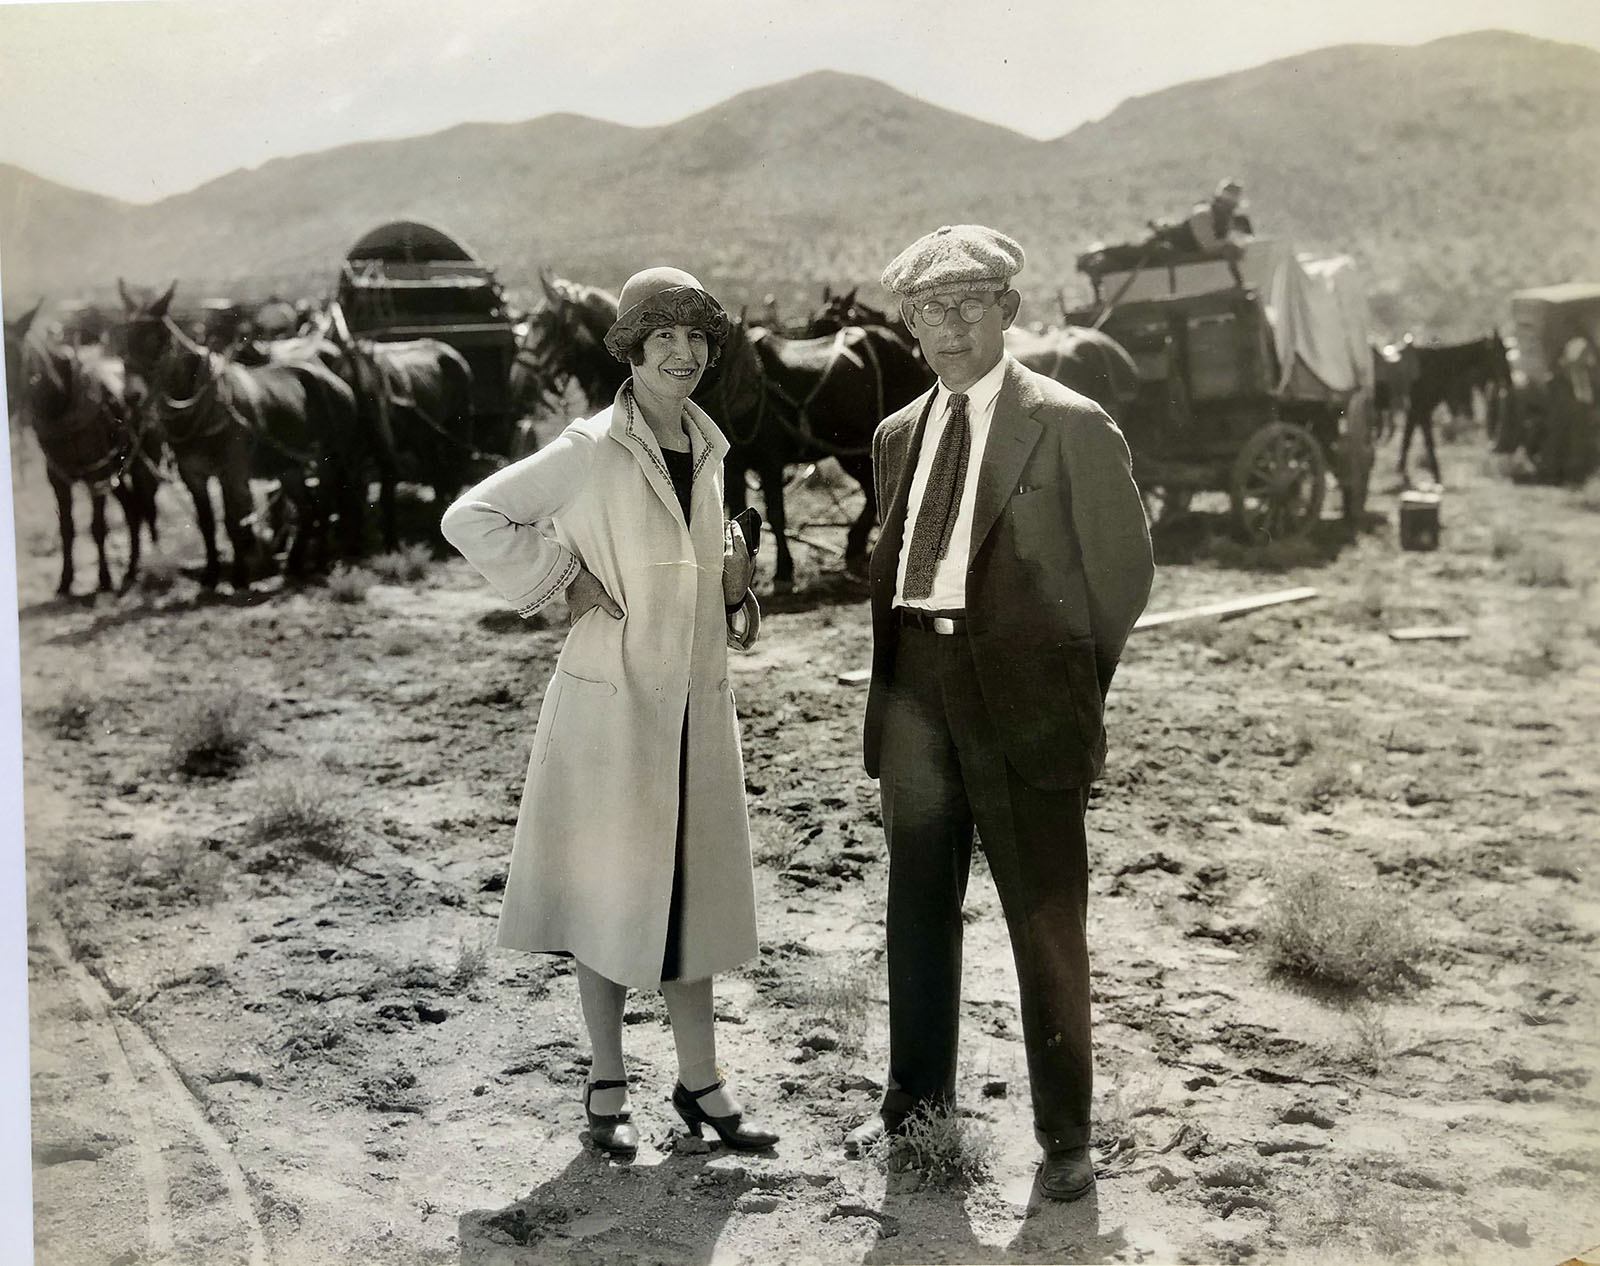 Sol and Marian on Western film location circa 1921